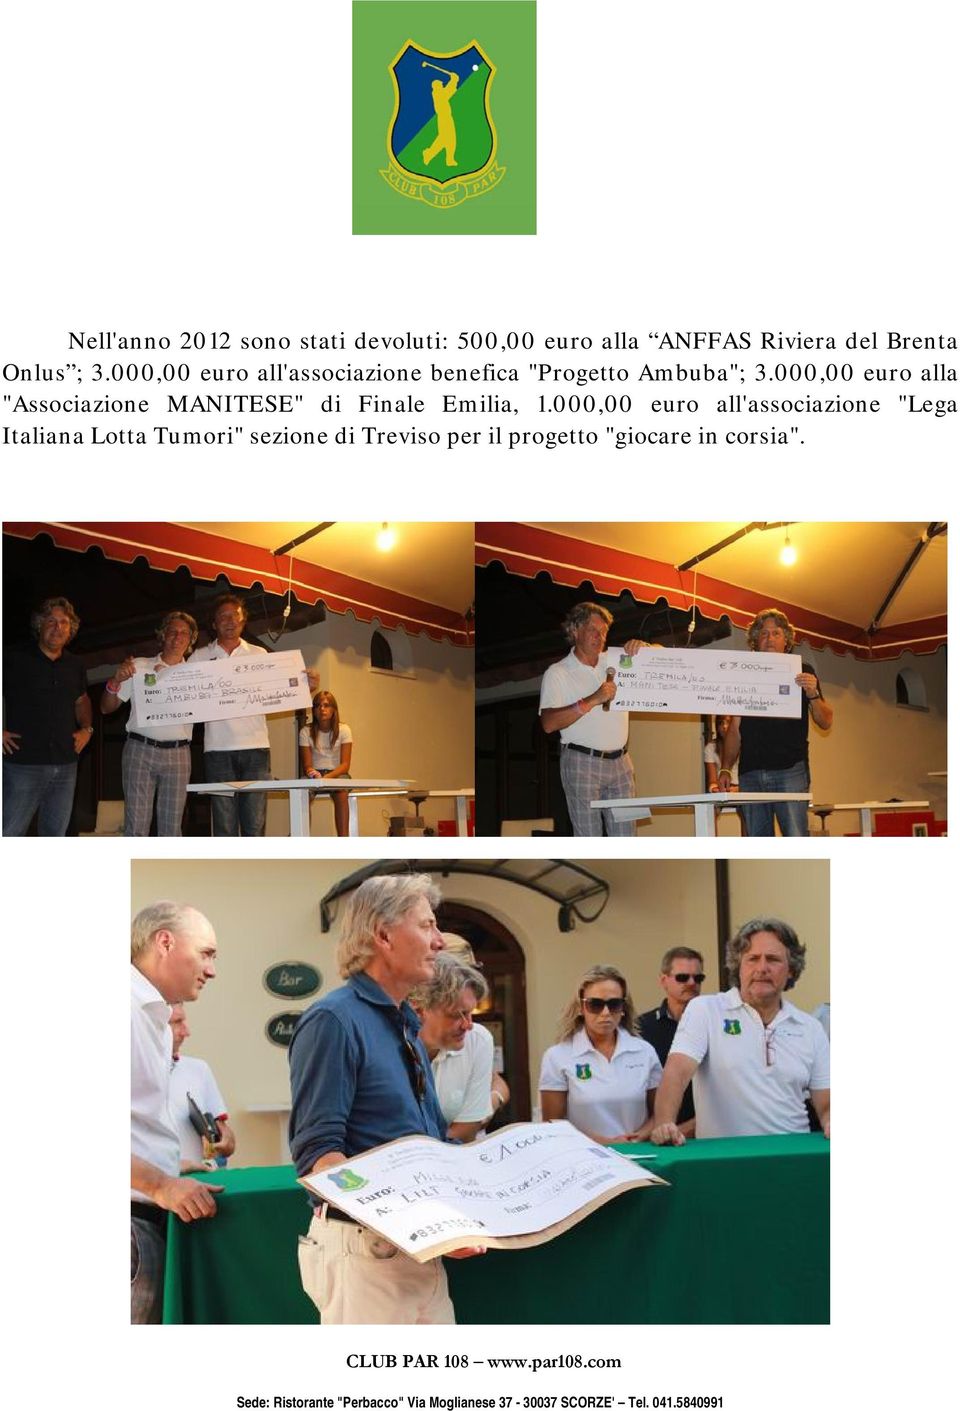 000,00 euro alla "Associazione MANITESE" di Finale Emilia, 1.